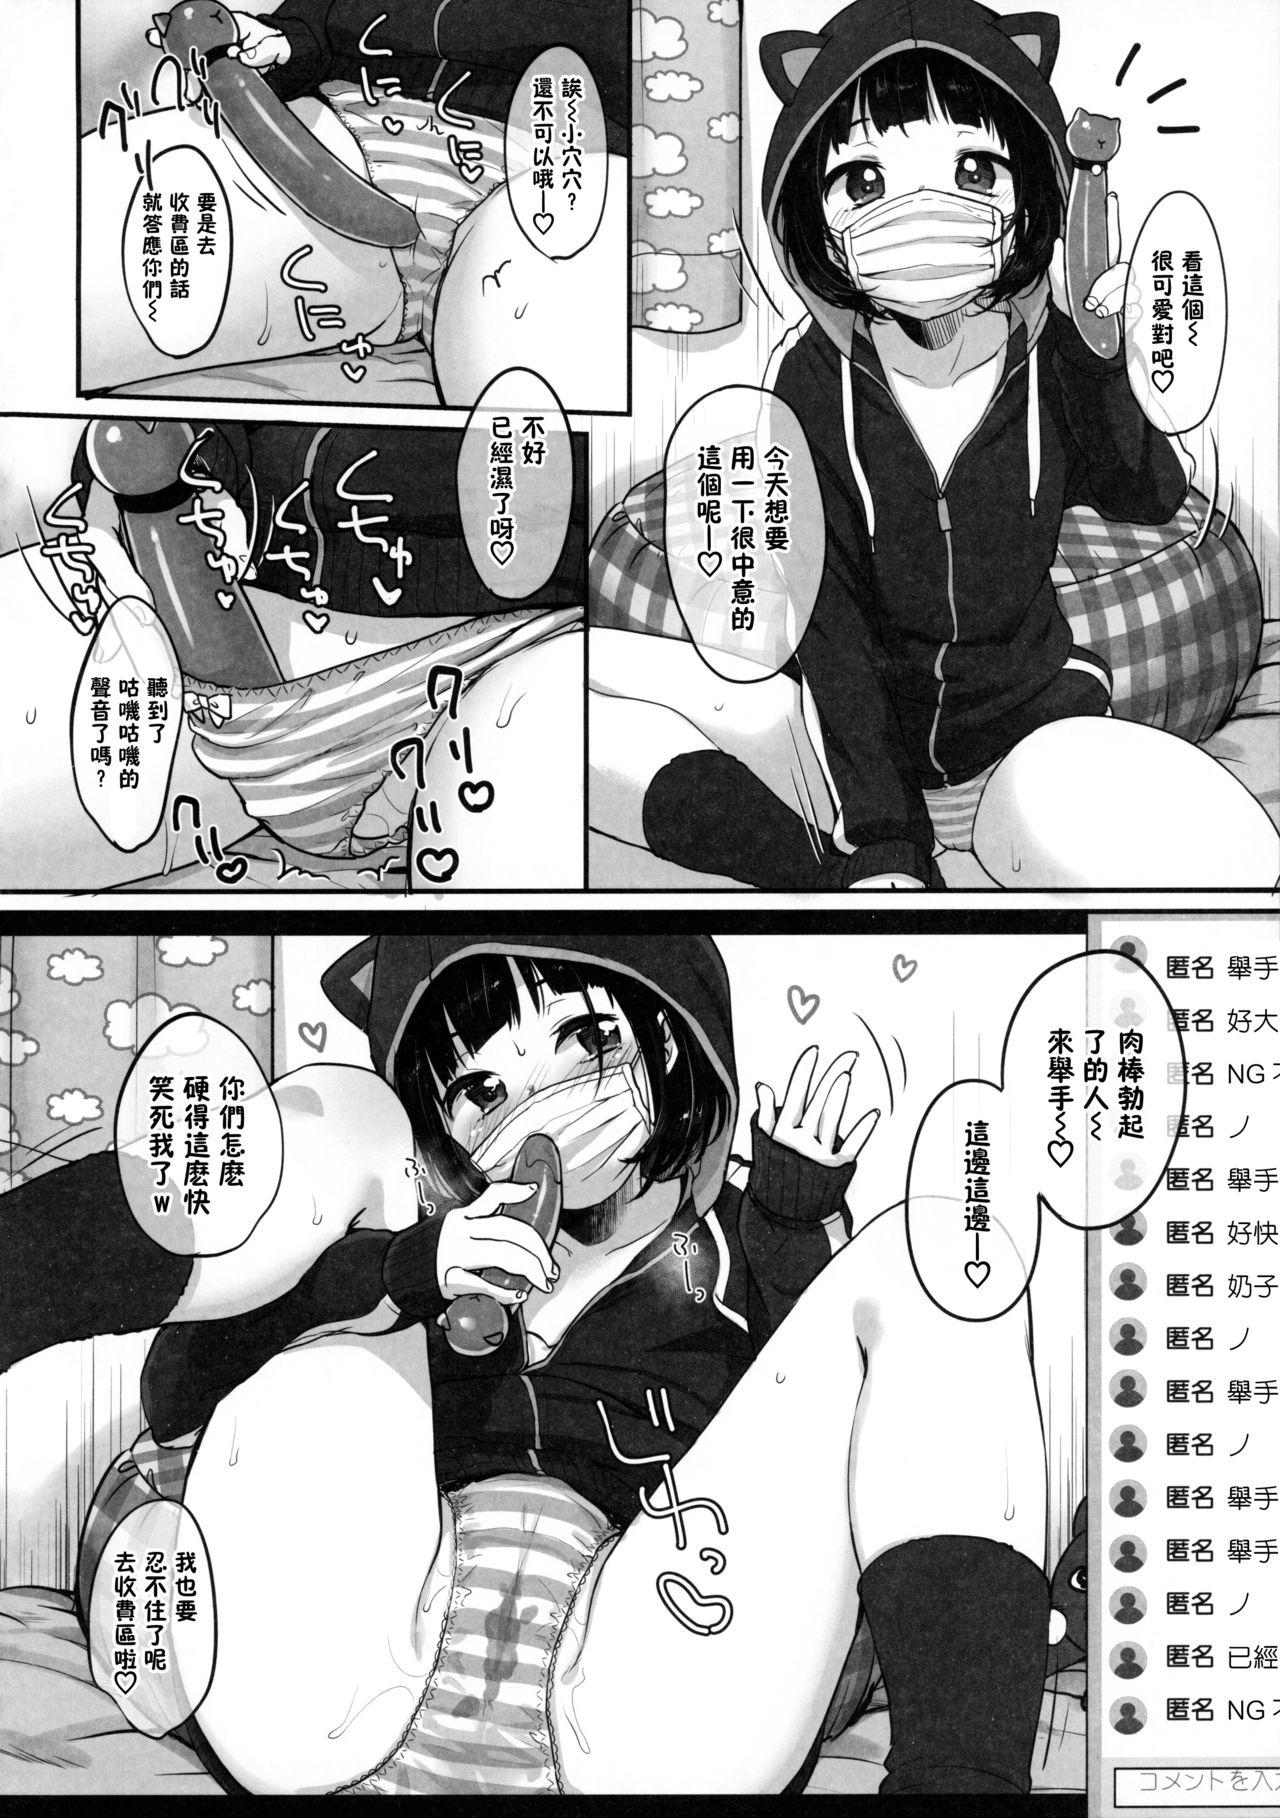 Penetration Suiyoubi no Ero Haishin - Original Cheating - Page 4